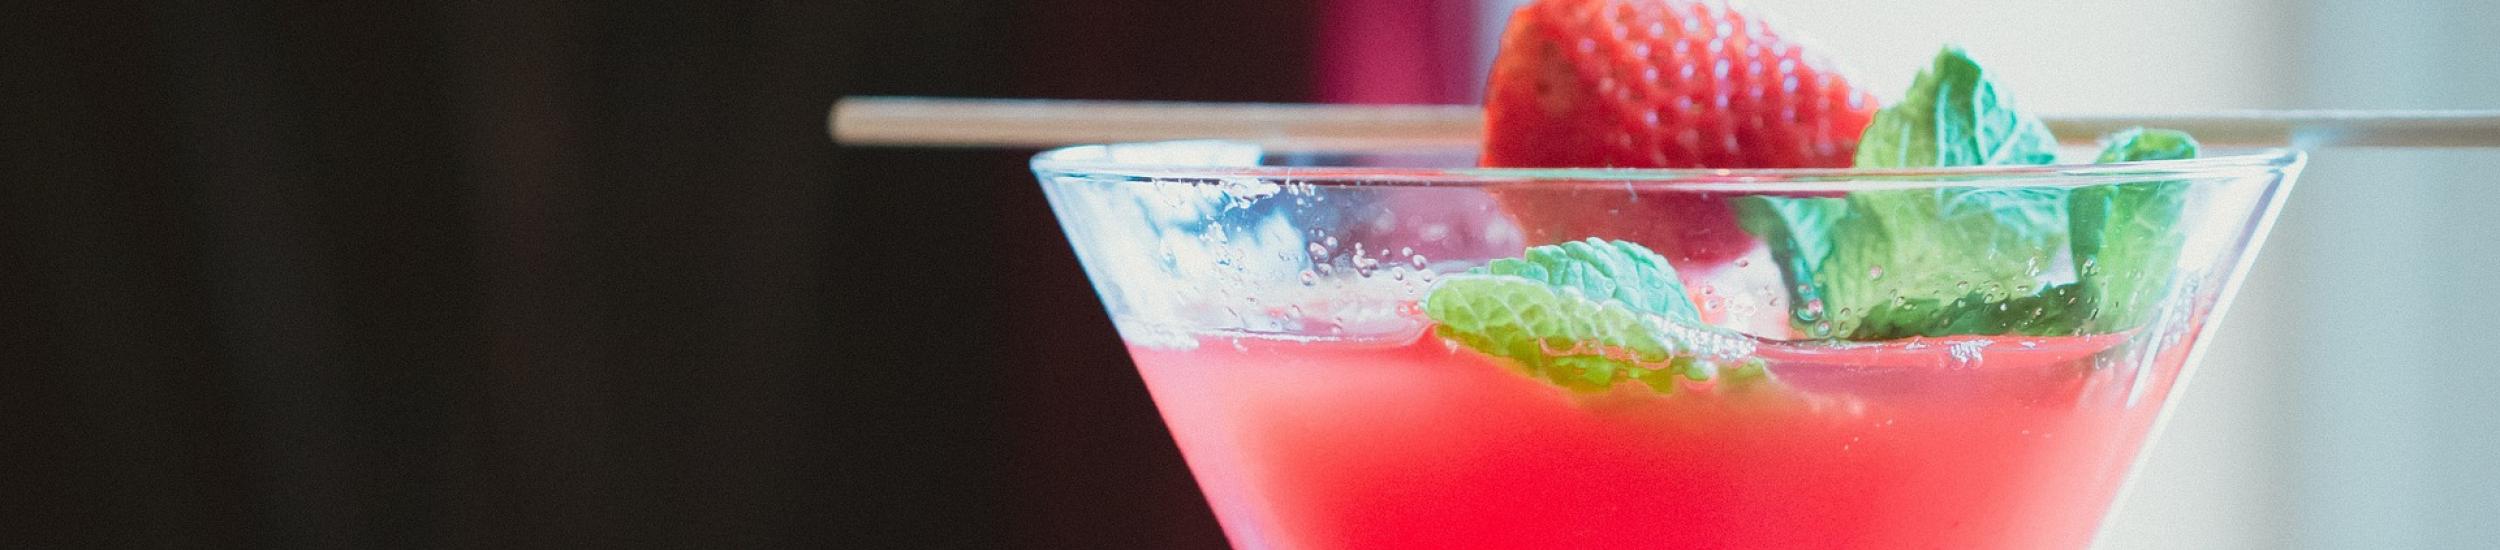 bicchiere con cocktail